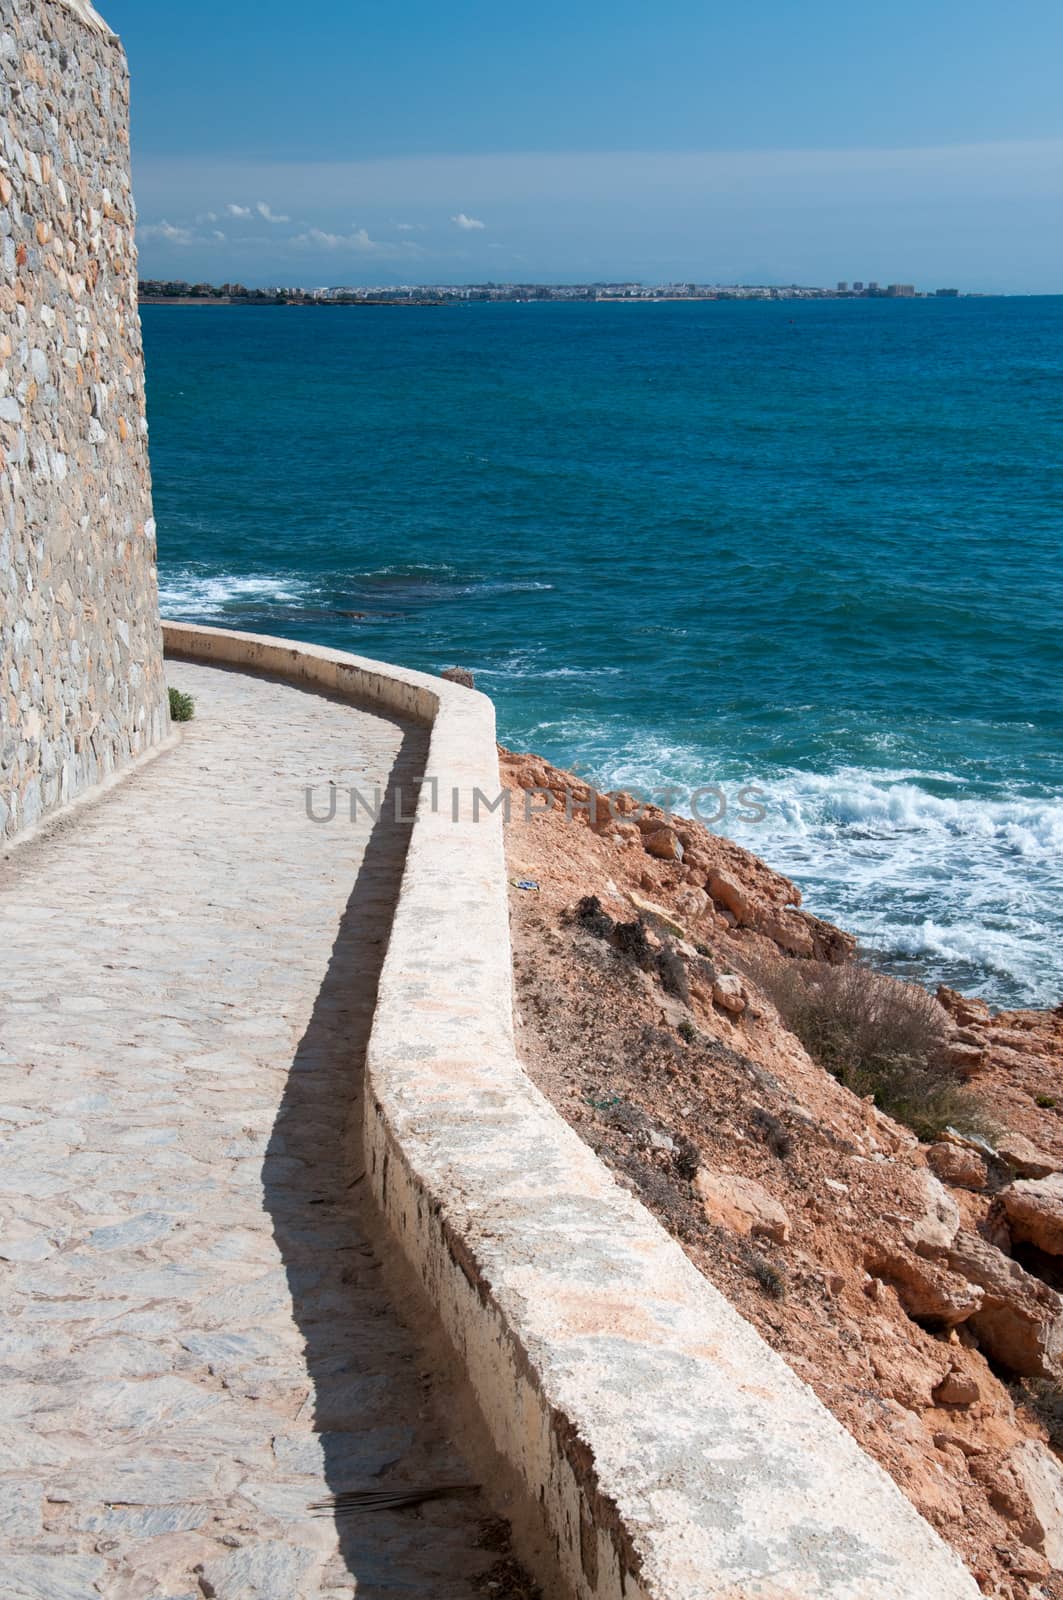 Edgy path along Mediterranean shore by ArtesiaWells